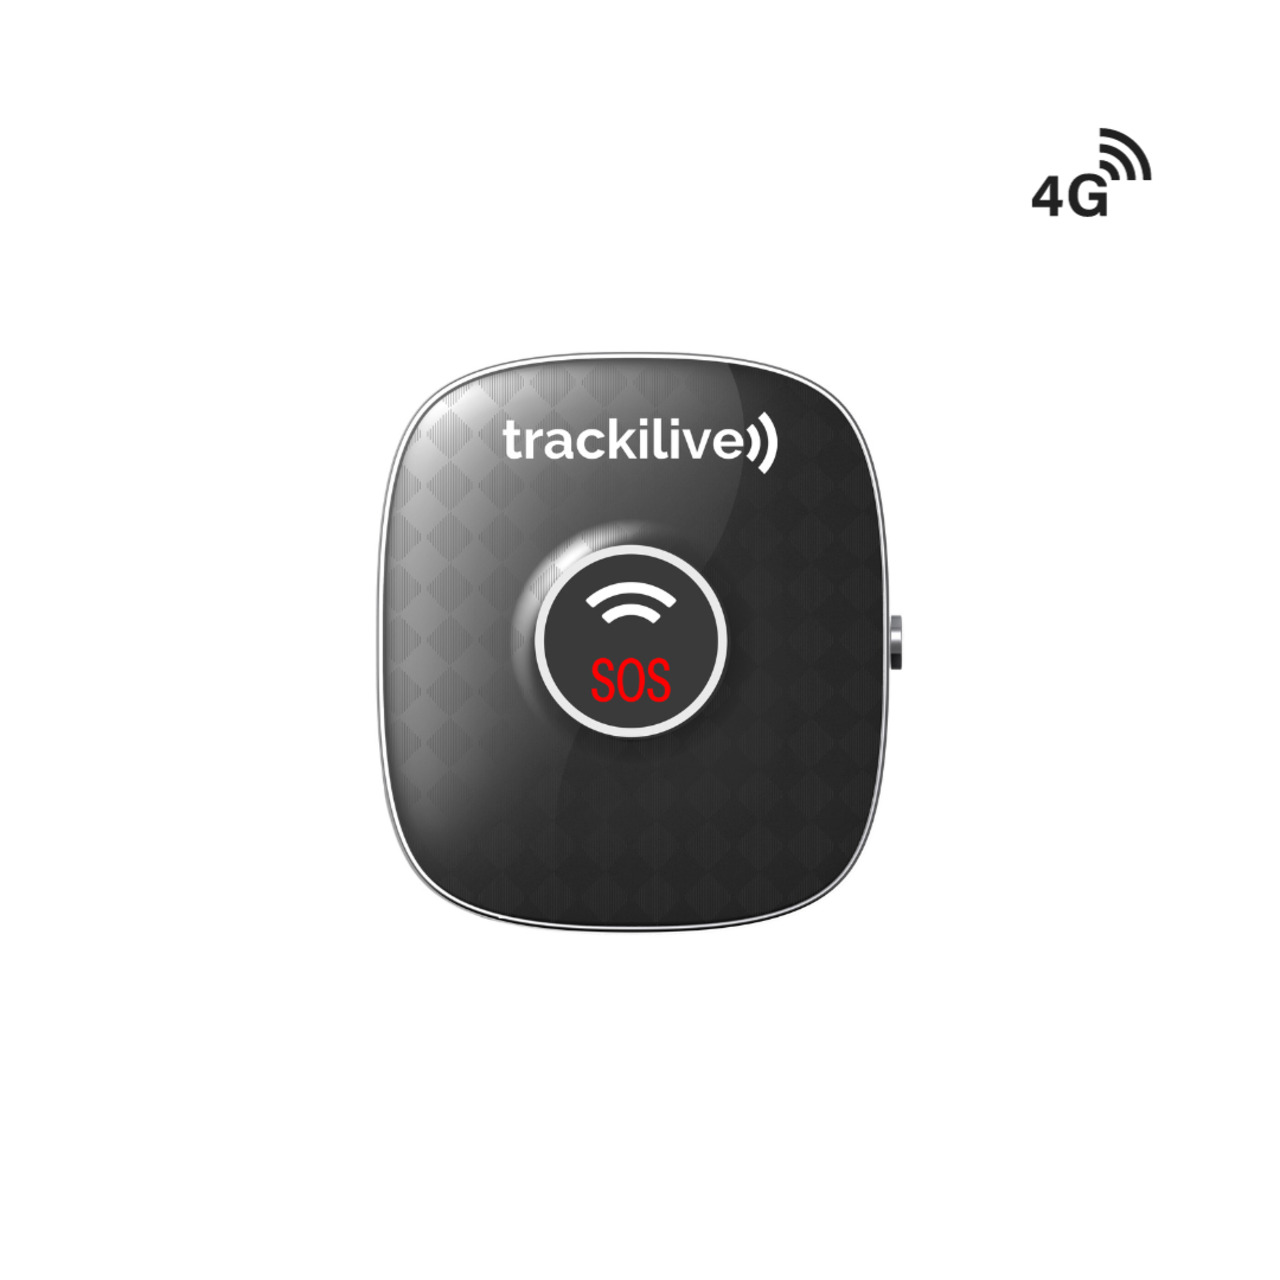 Trackilive GPS-Tracker TL-10 4G- mit SOS-Taste- 30-Tage-Historie- 730-mAh-Akku- IPX7